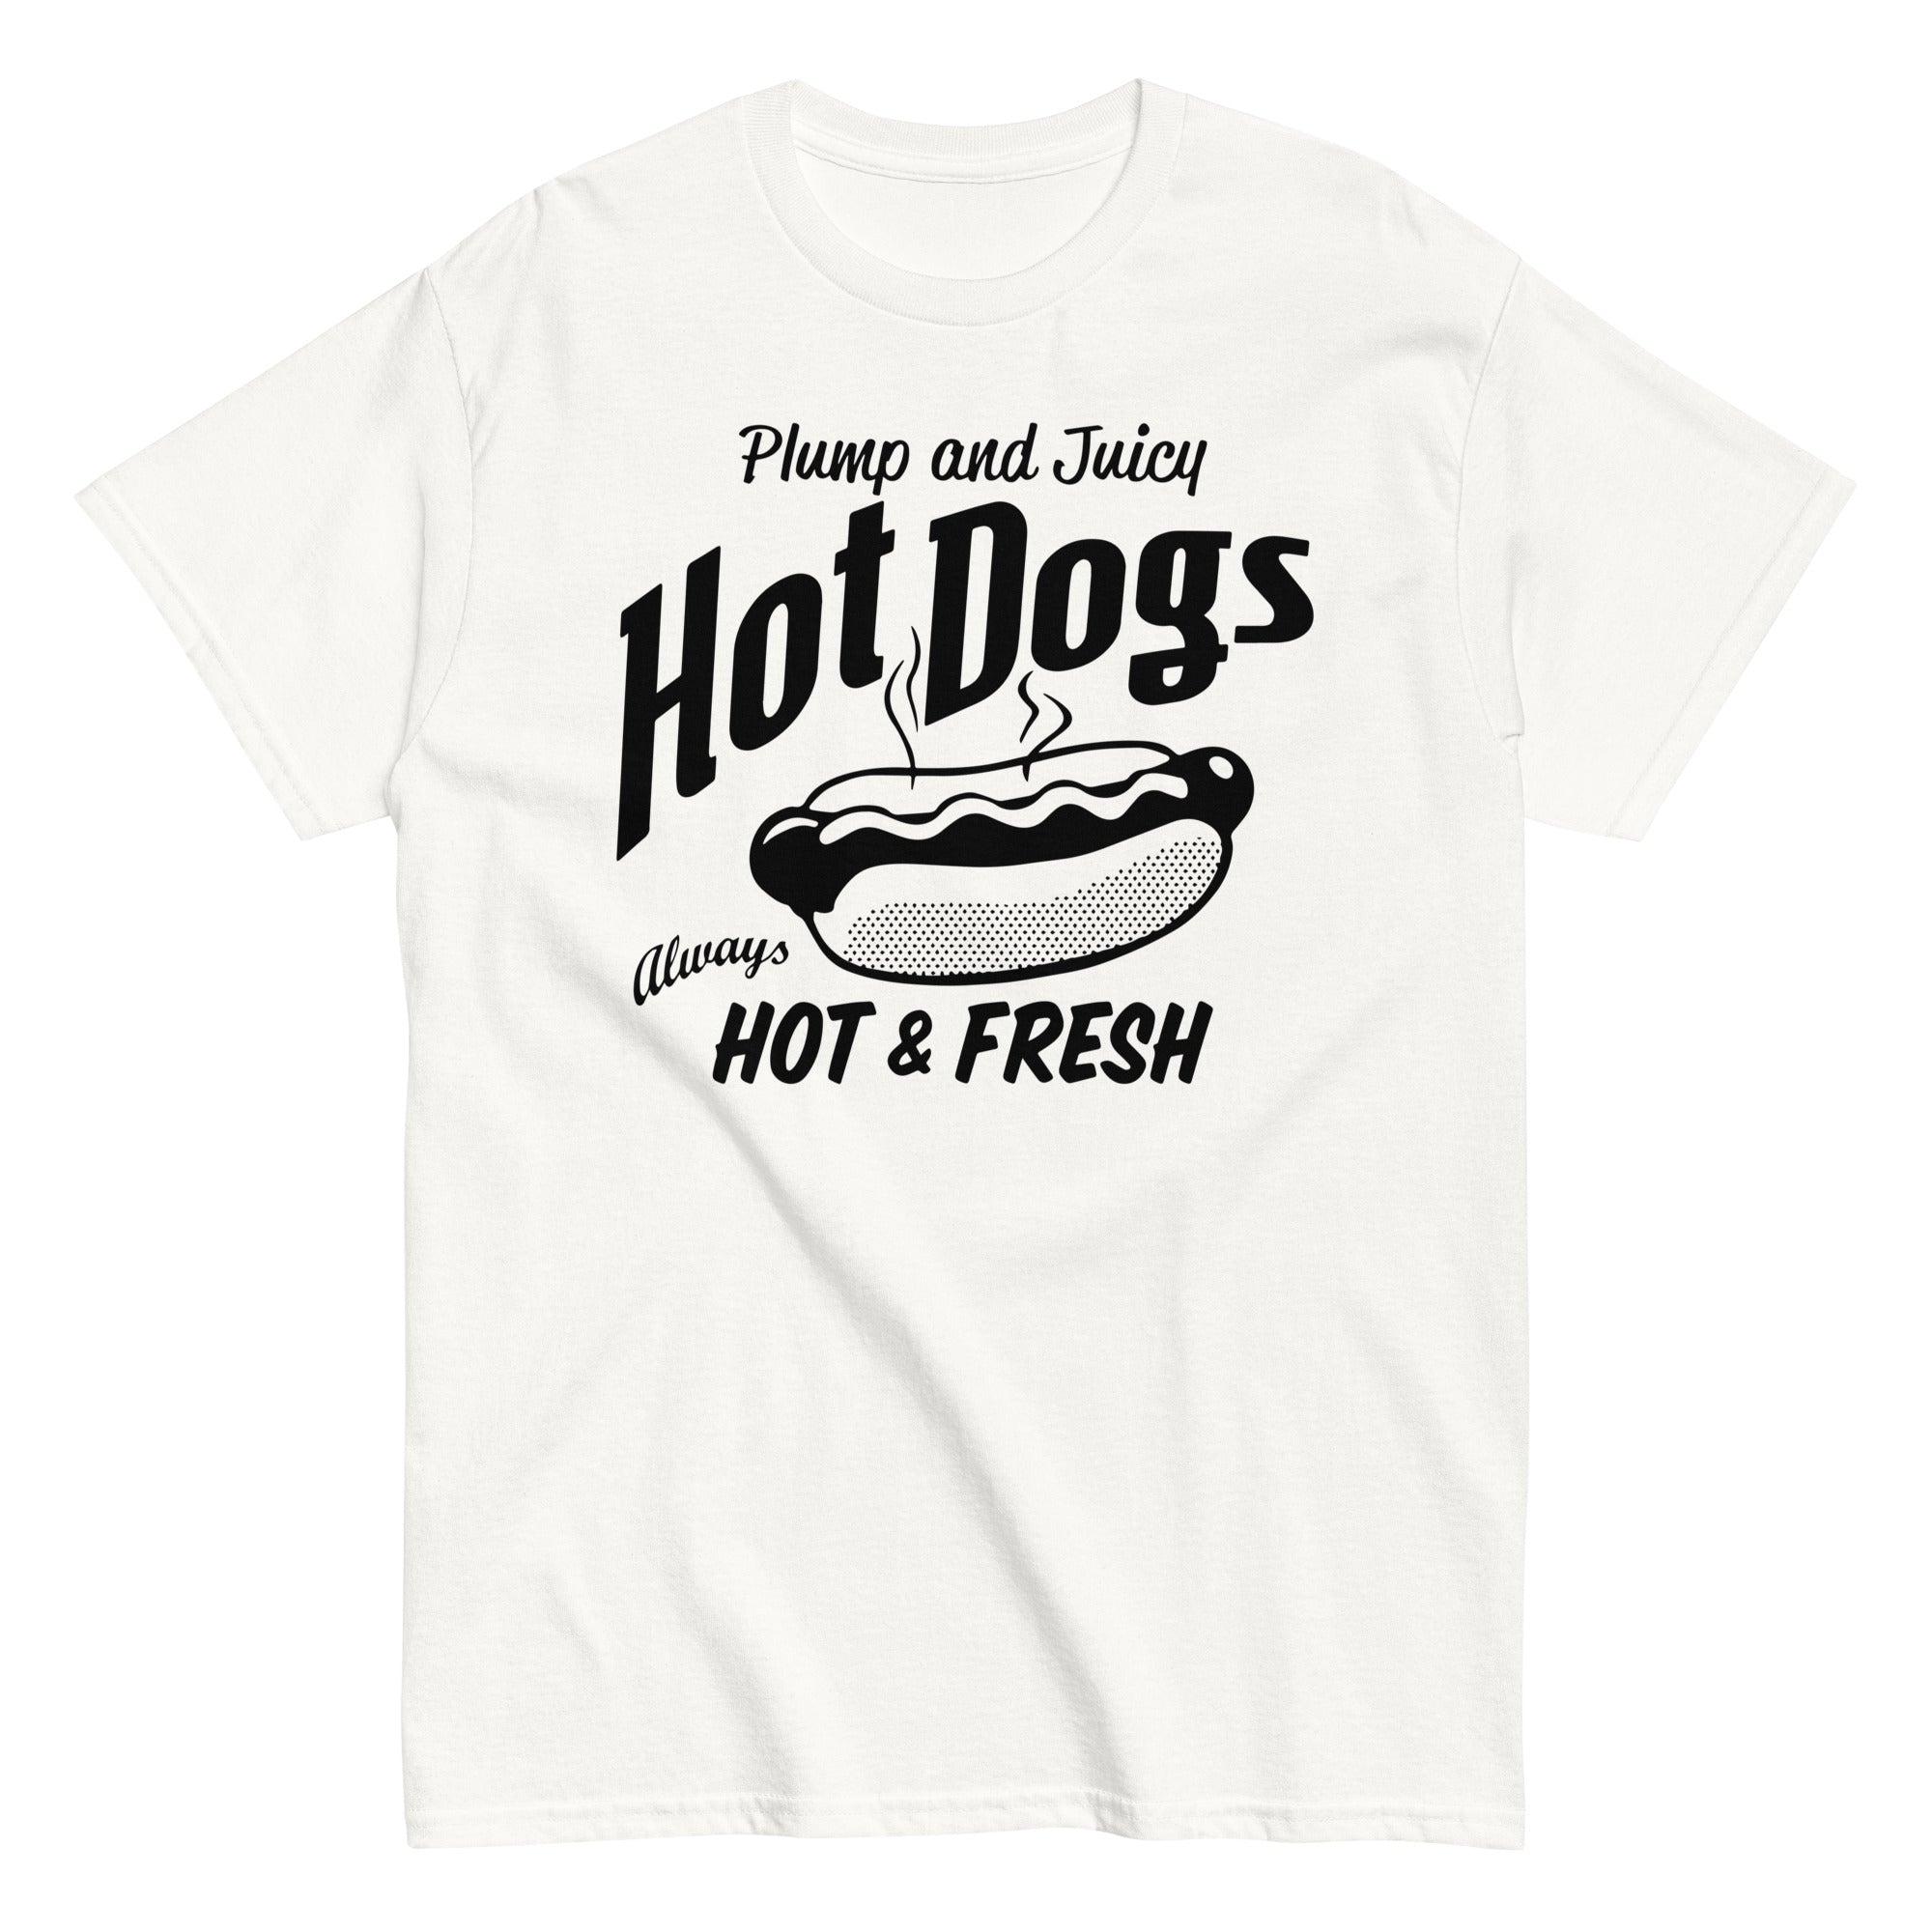 Juicy Hot Dogs T-Shirt